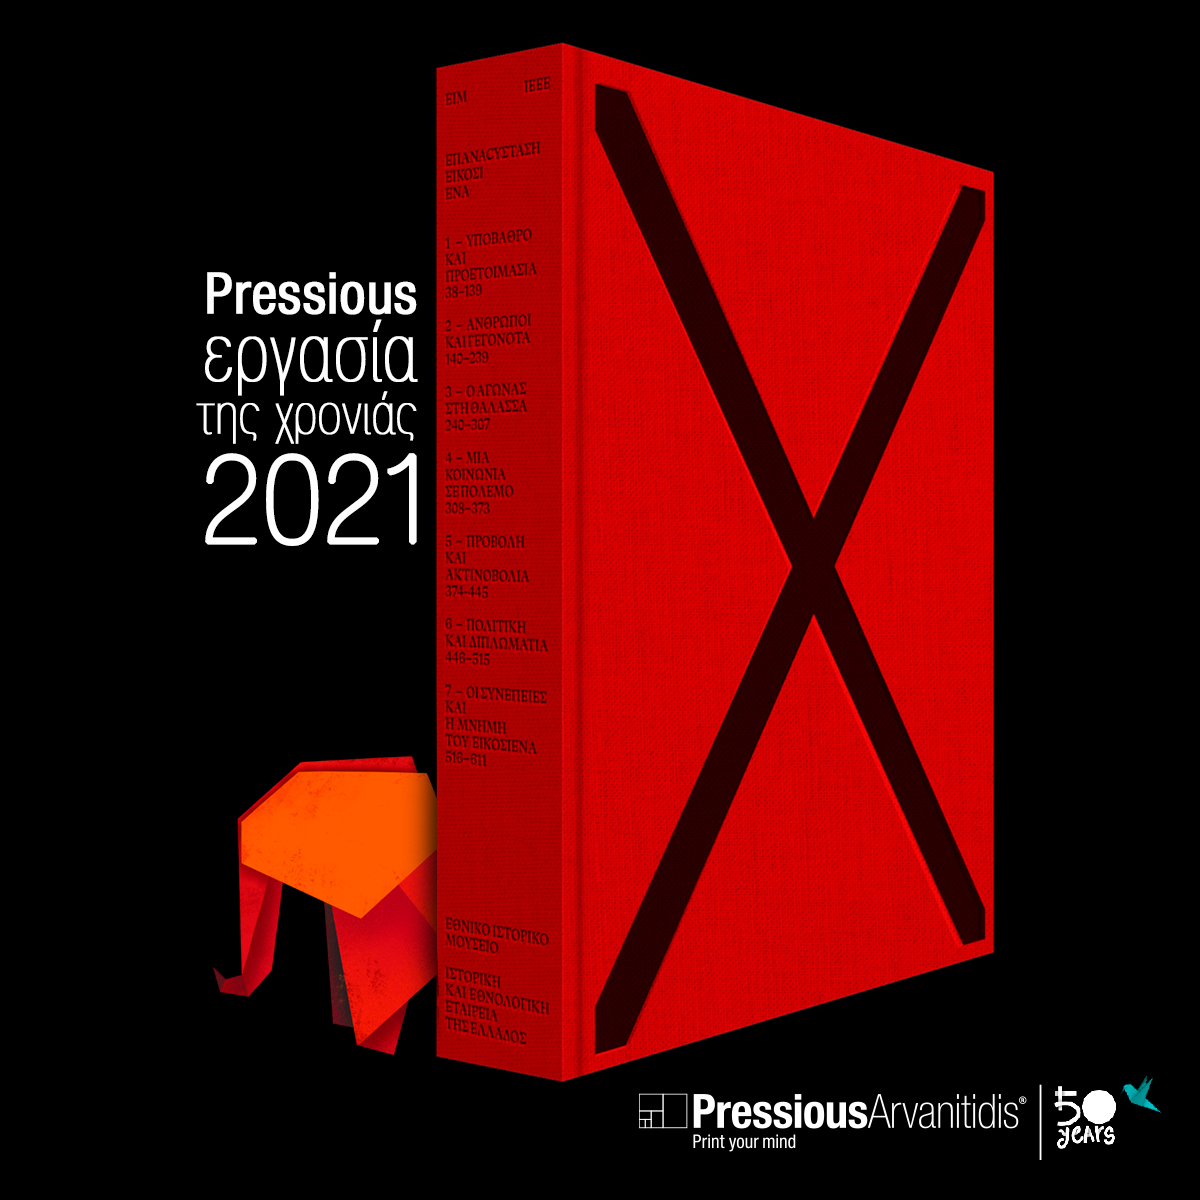 Pressious year’s job 2021